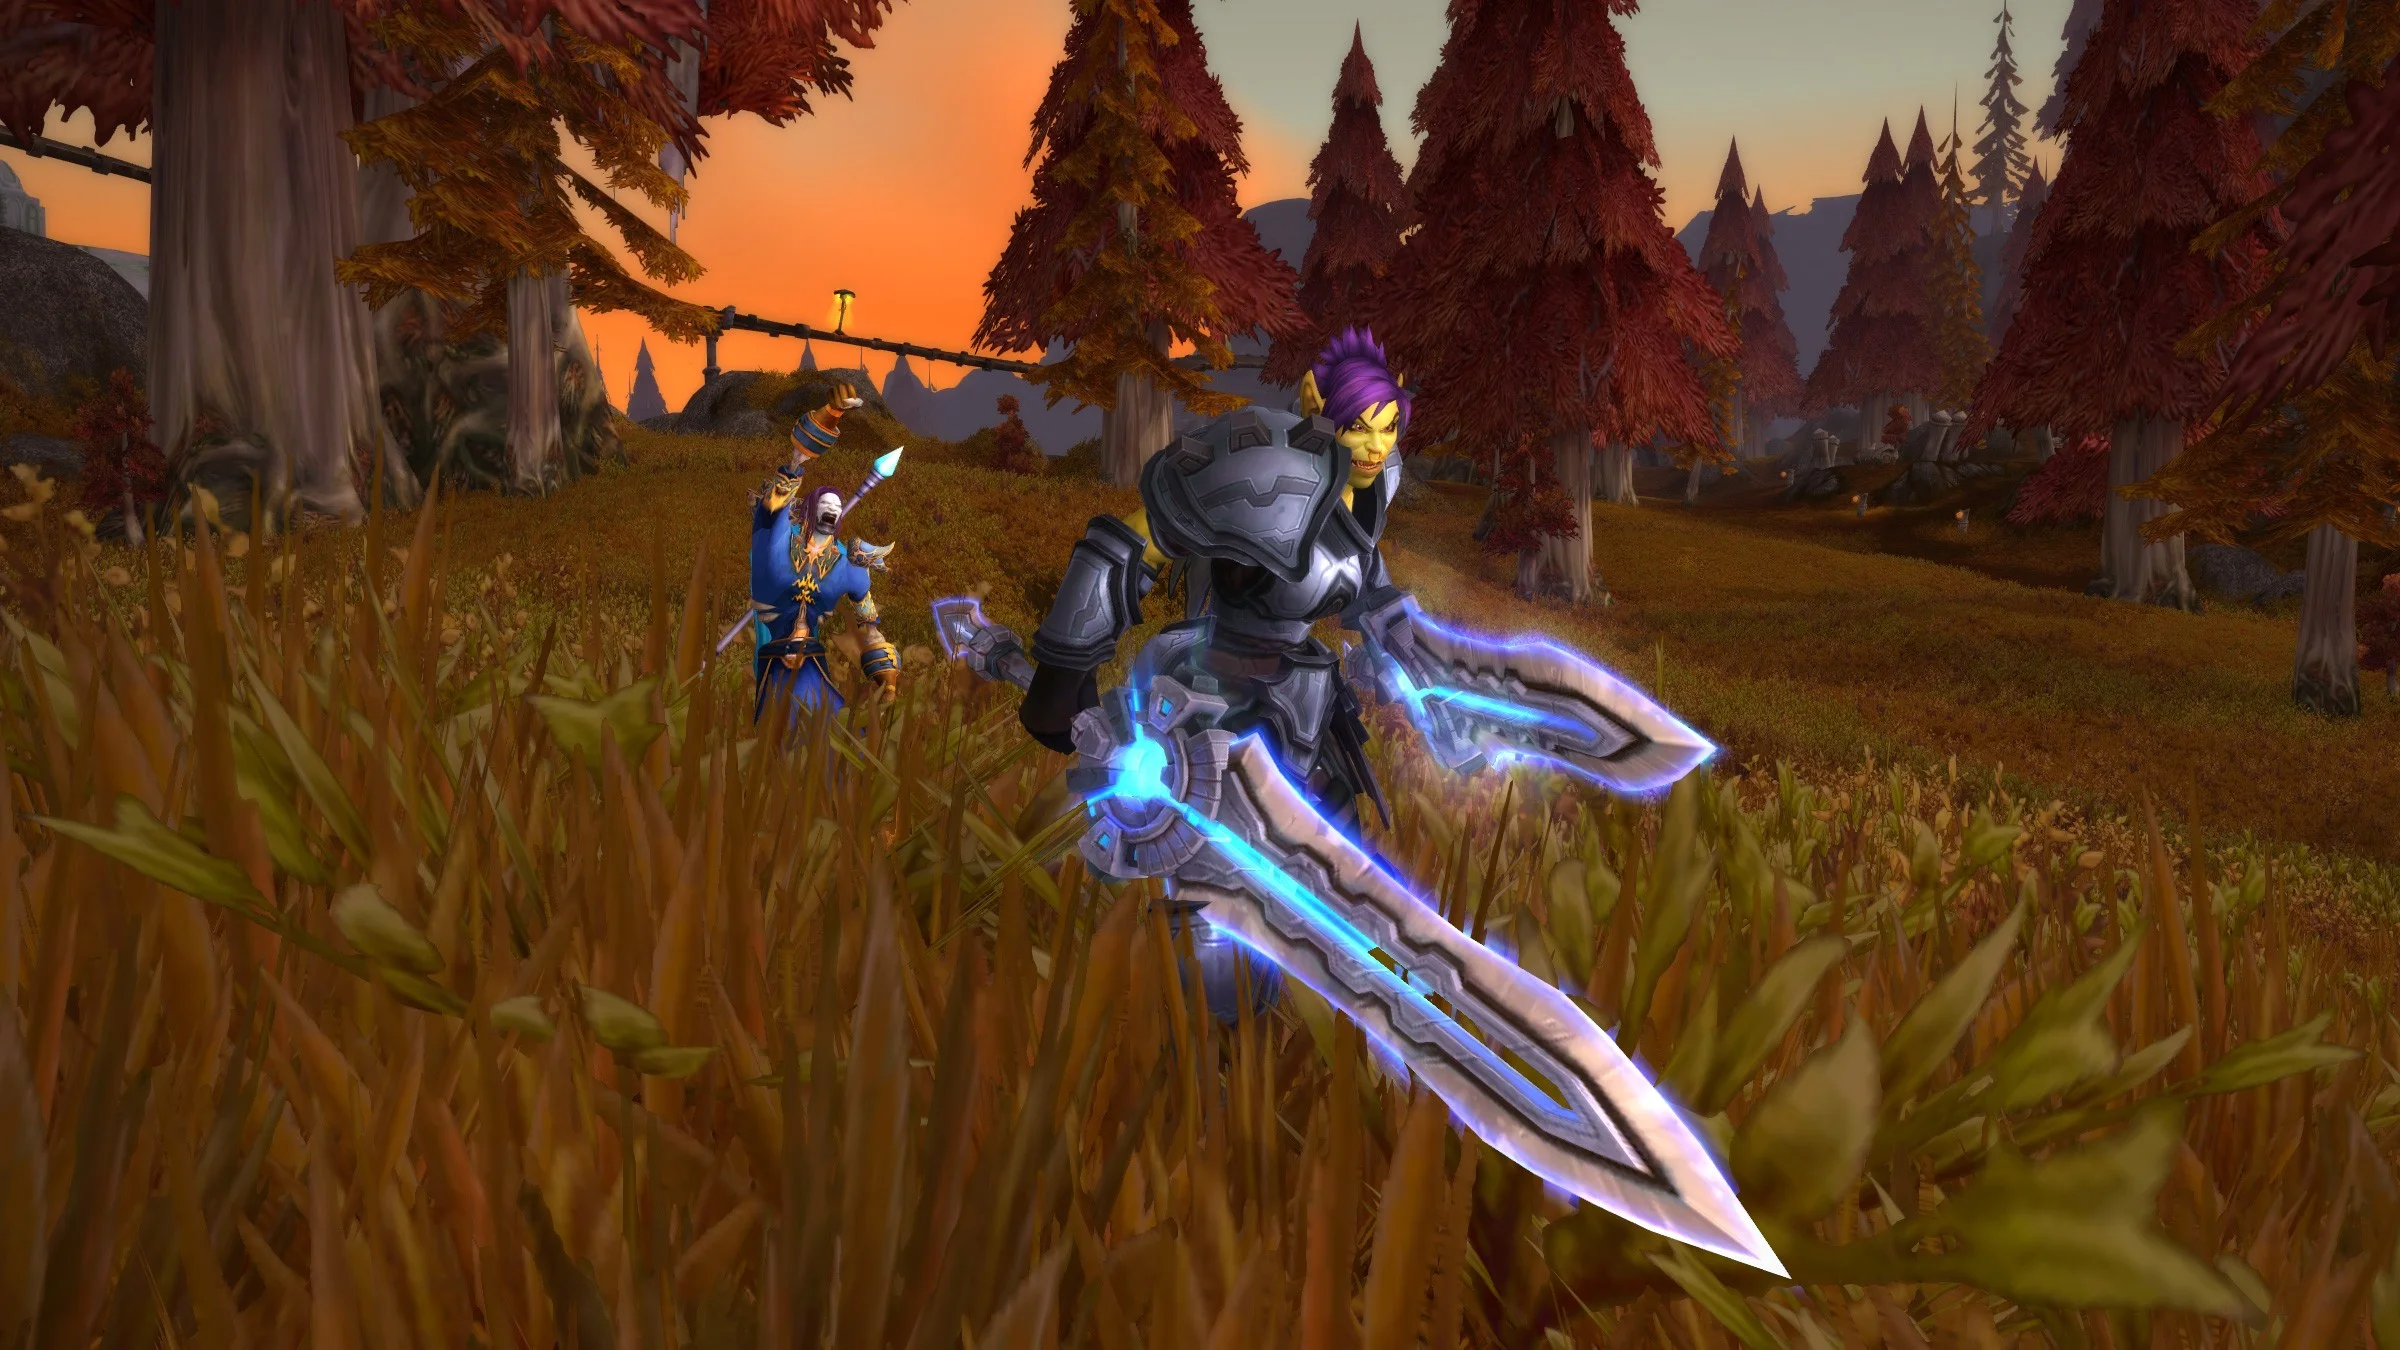 Tails of azeroth blue is better. Варкрафт ММОРПГ. Ворлд оф варкрафт 5. Blizzard World of Warcraft. World of Warcraft 2004.